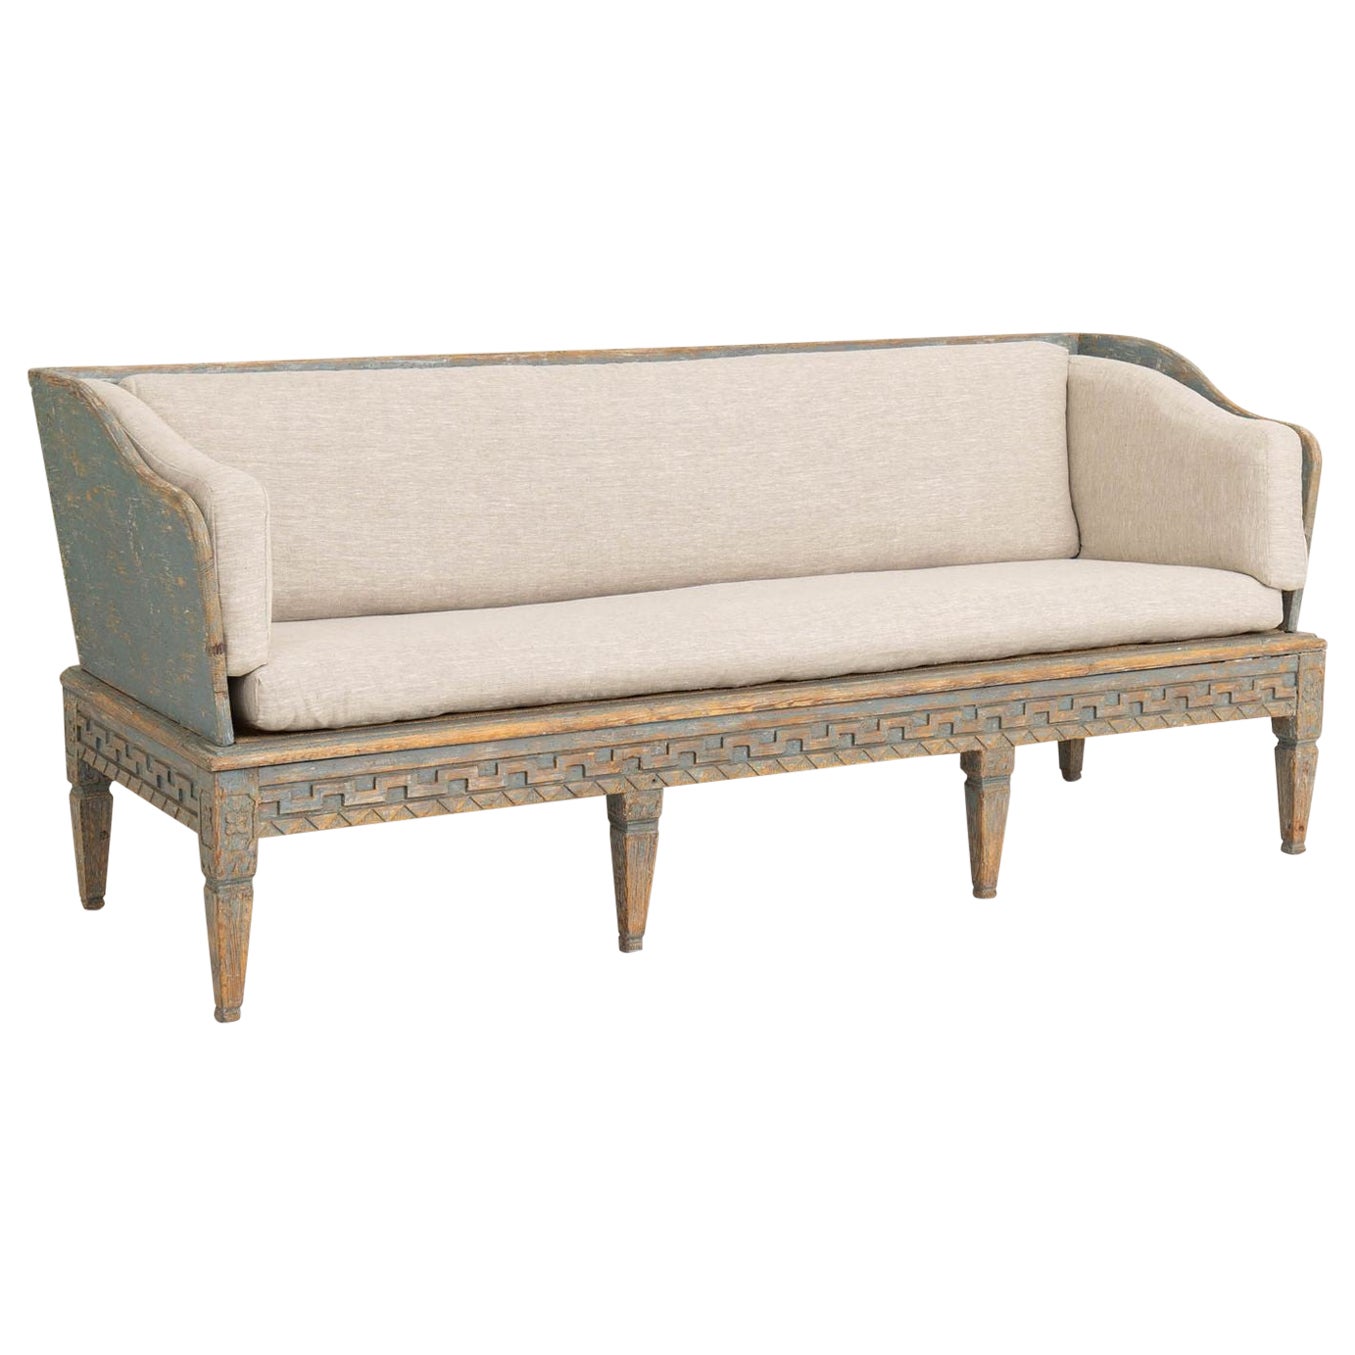 18th c. Swedish Gustavian Period Painted Sofa 'Trägsoffa' For Sale